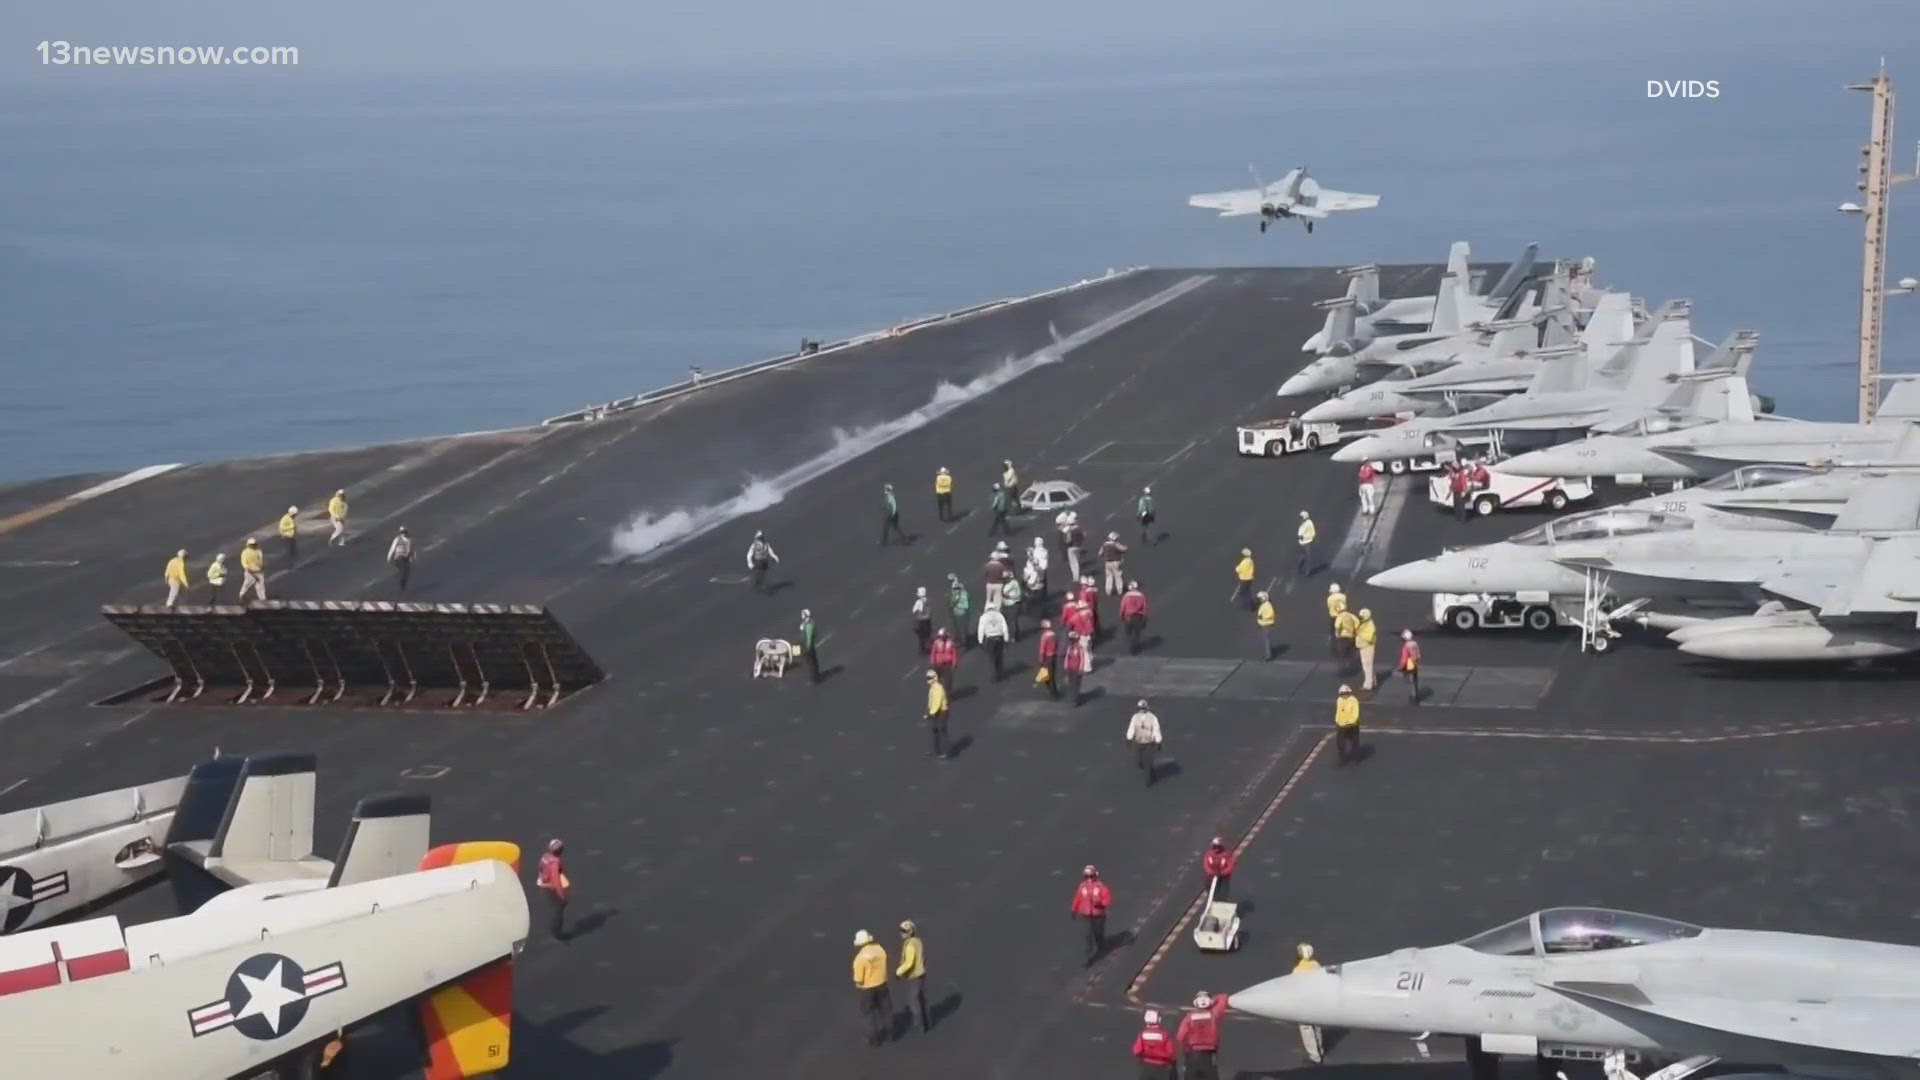 After almost nine months of defending commercial ships against Houthi rebels, the USS Eisenhower is set to arrive at Naval Station Norfolk on Sunday, July 14.